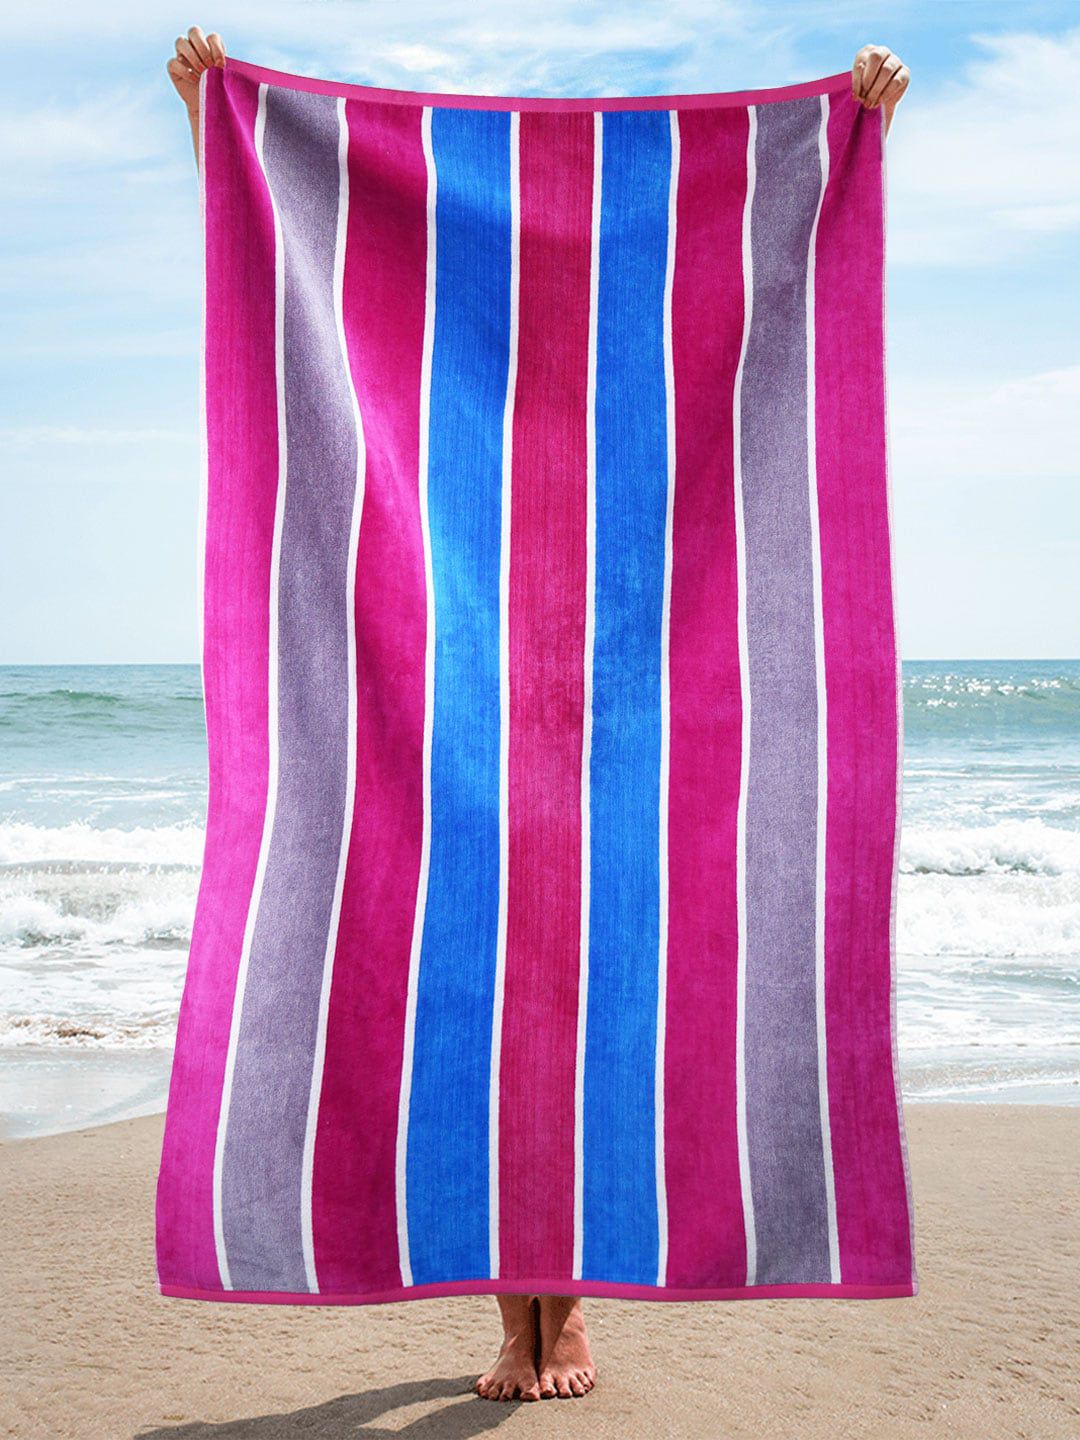 Trident Purple & Blue Striped Cotton 500 GSM Bath Towel Price in India